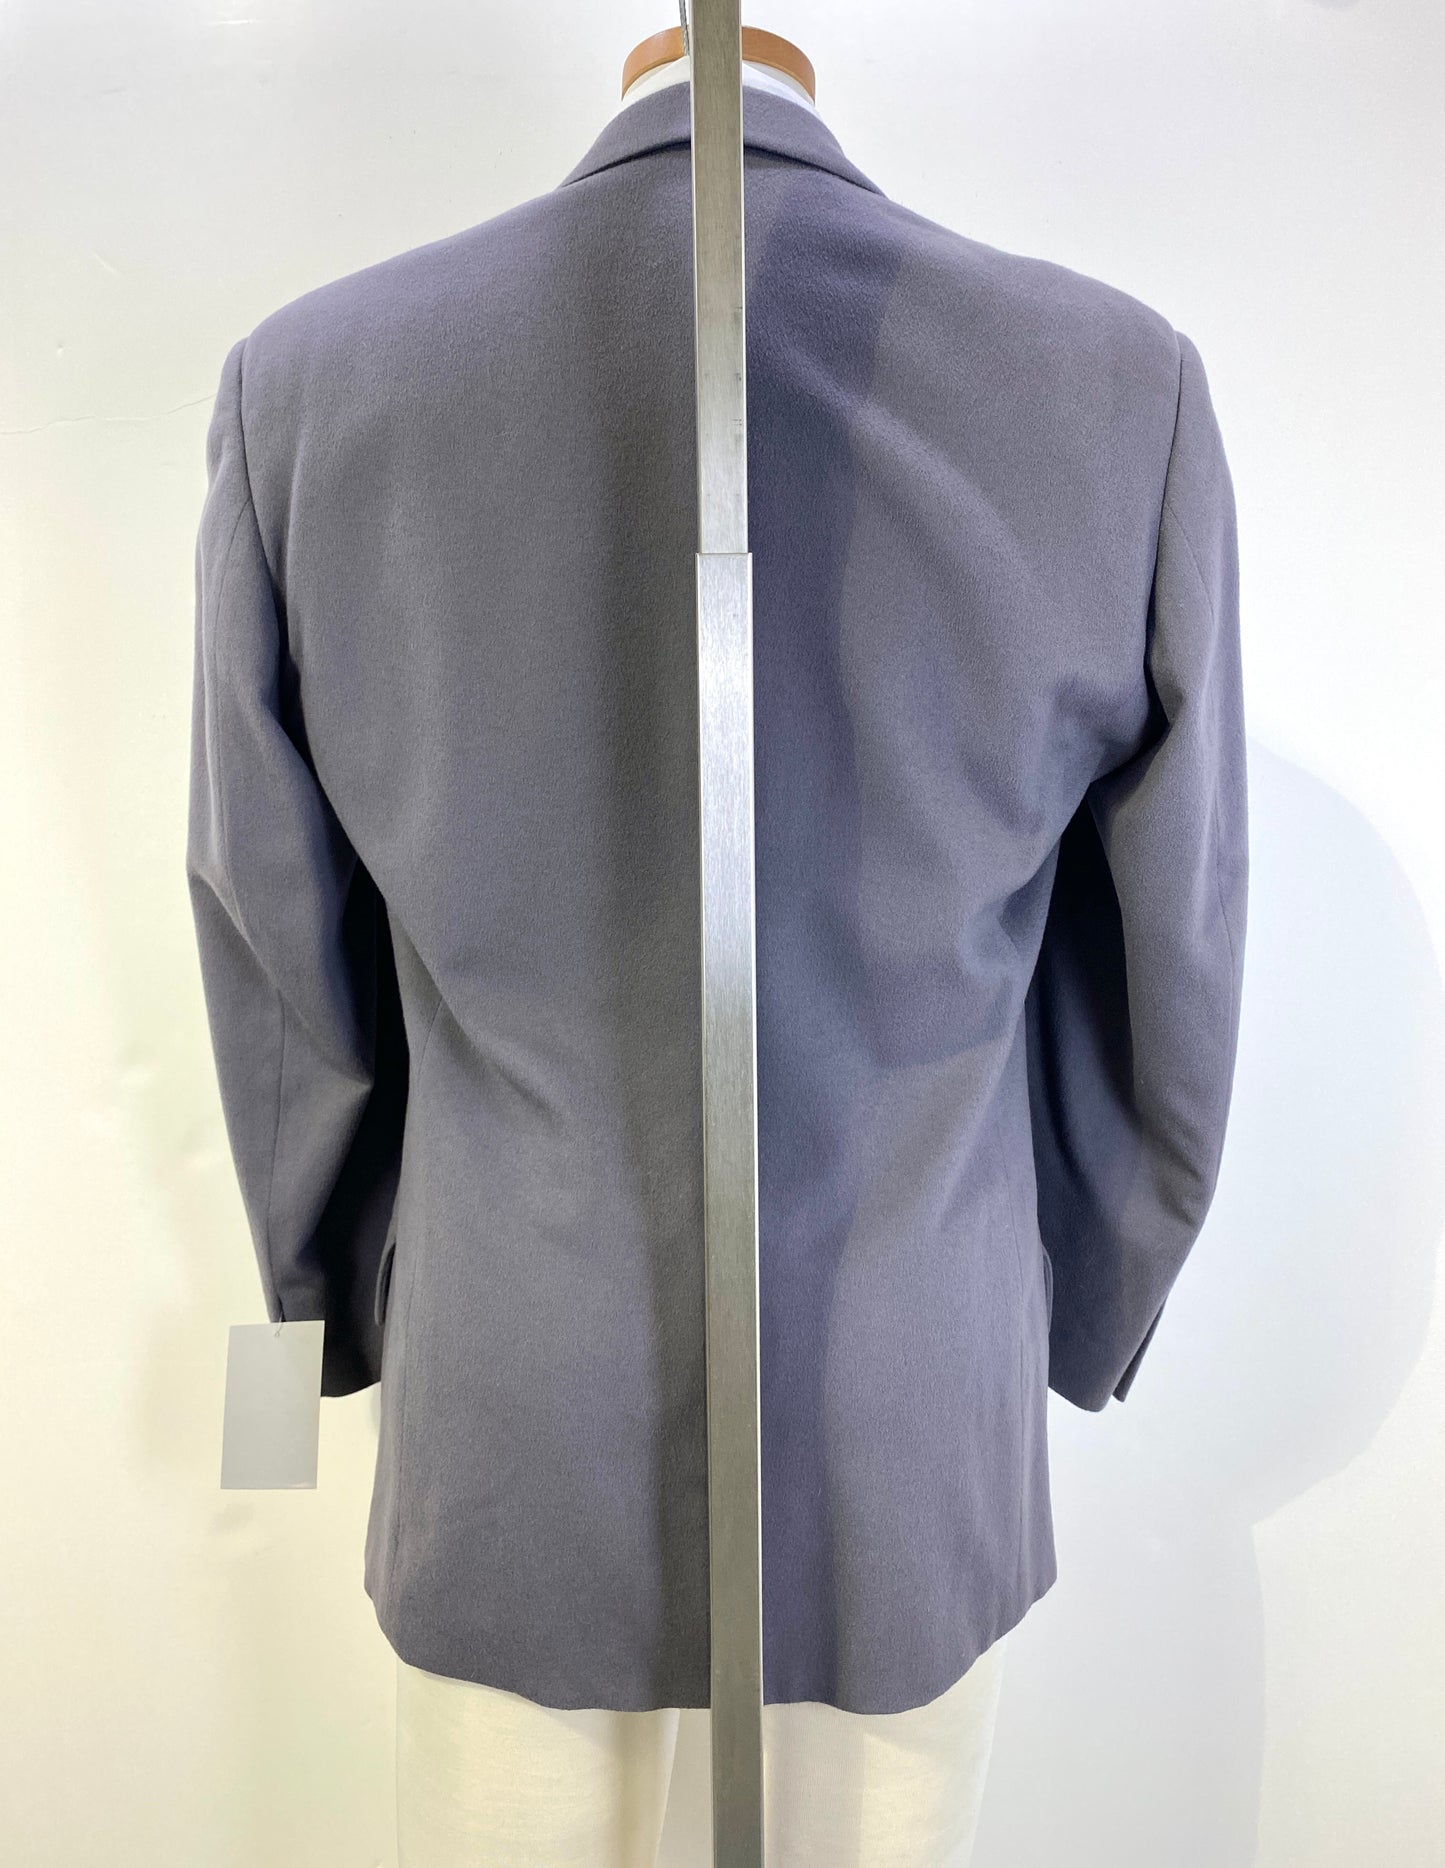 Early 1990s Vintage Grey Wool Men's Blazer, Gianni Versace Designer Jacket, C40